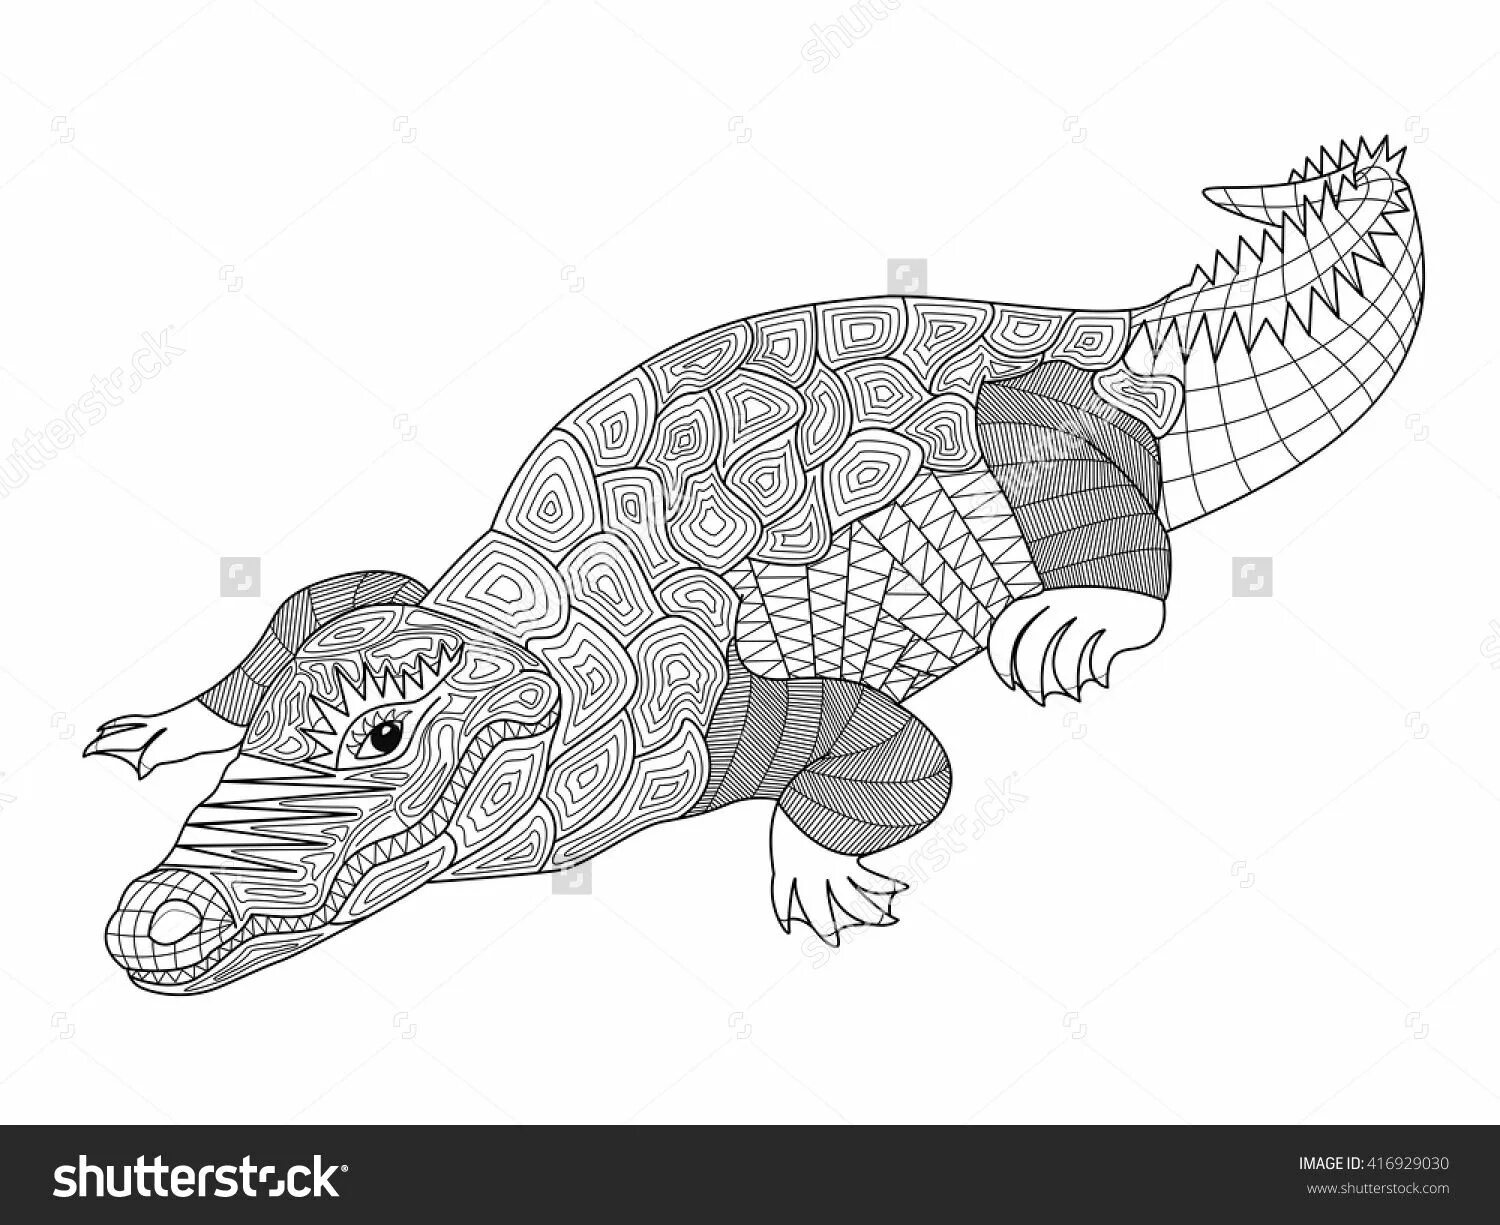 Harmonious crocodile coloring antistress